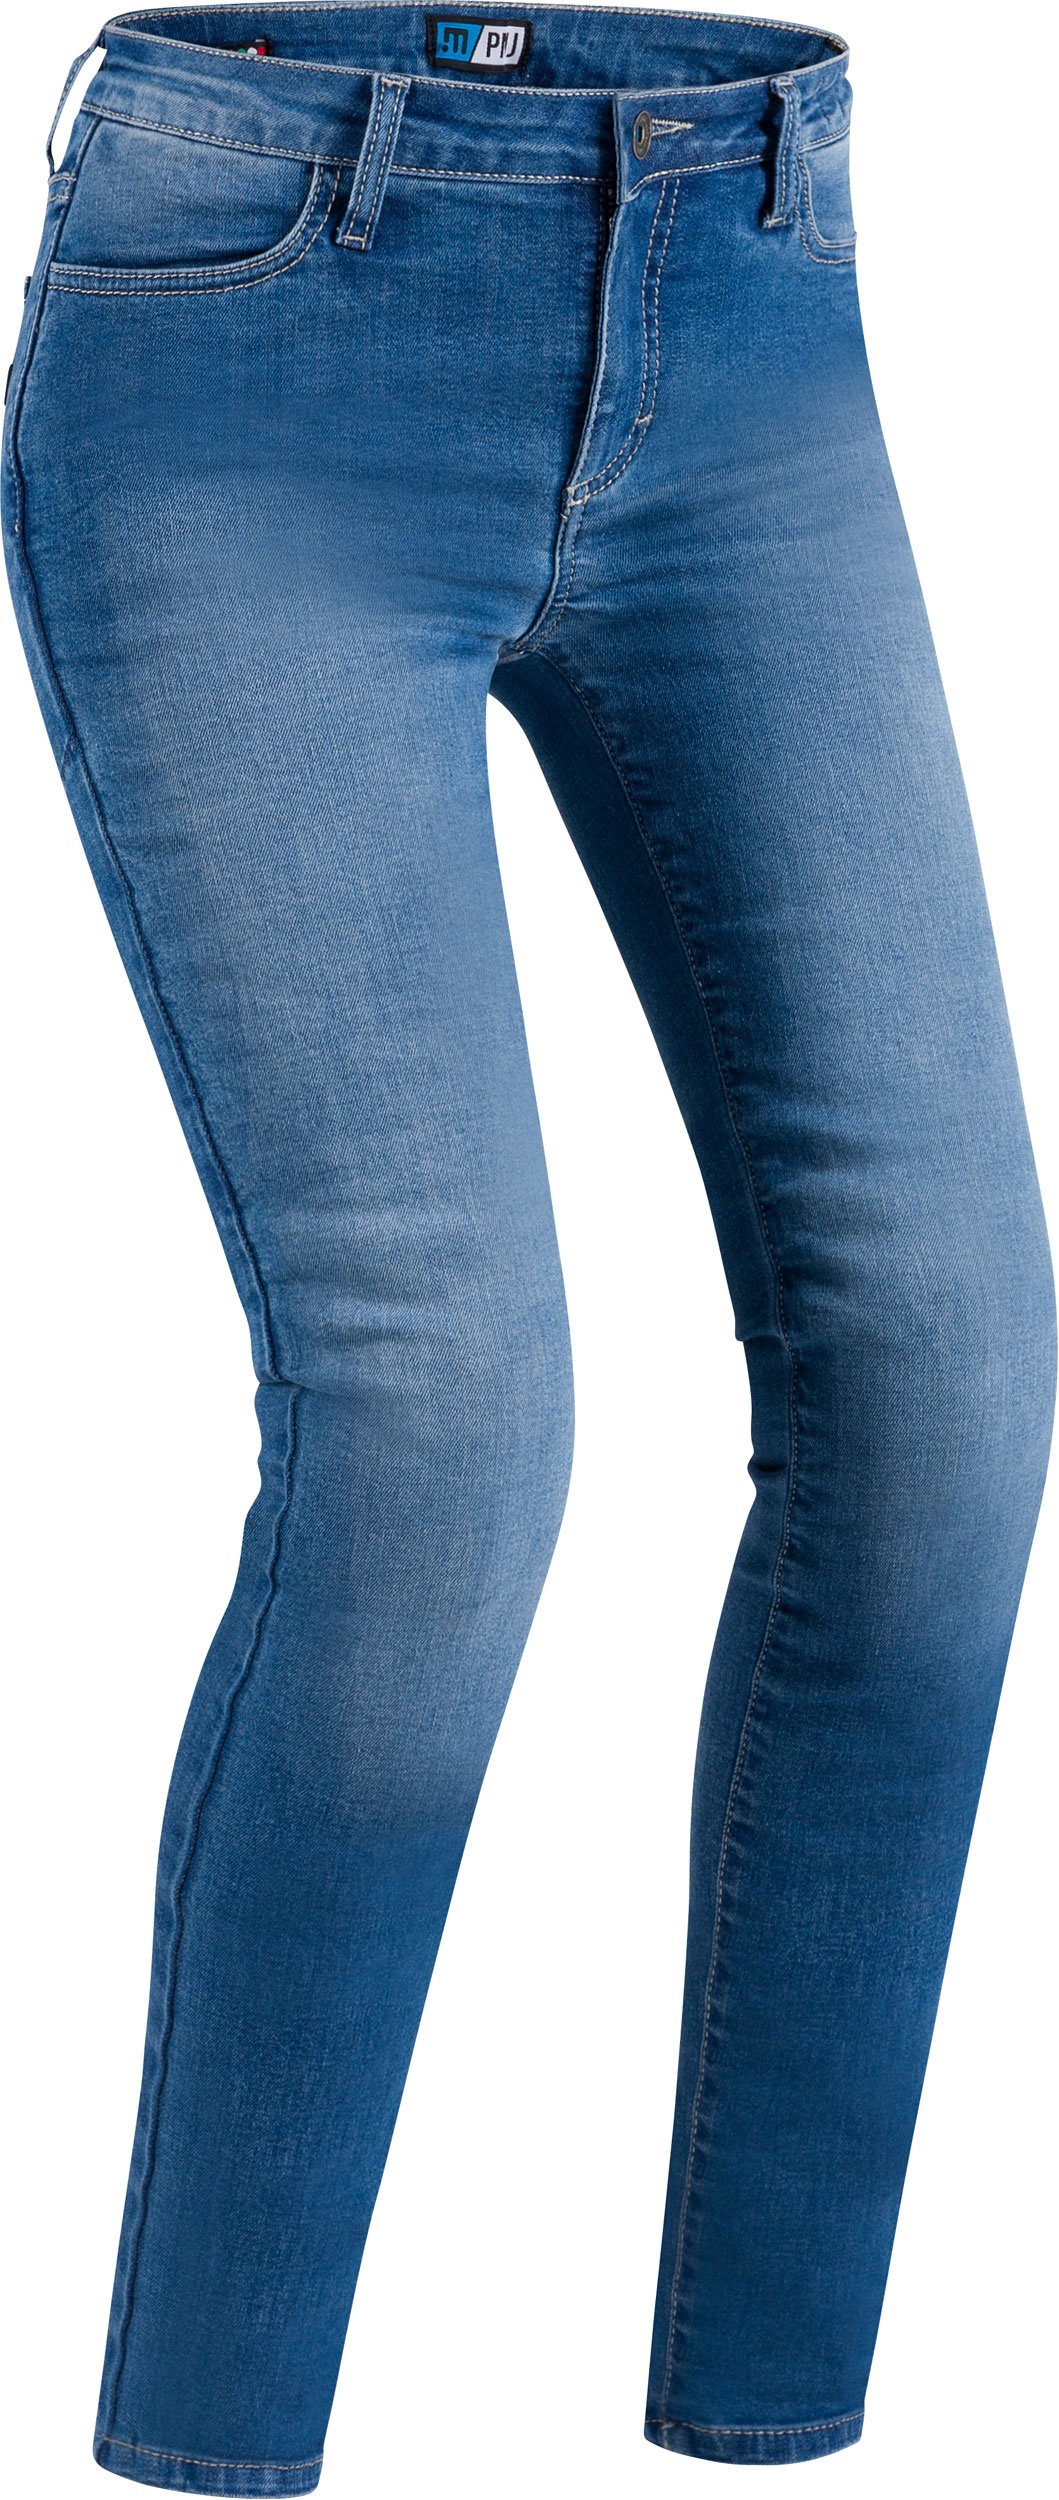 PMJ Skinny, femmes jeans - Bleu - 30